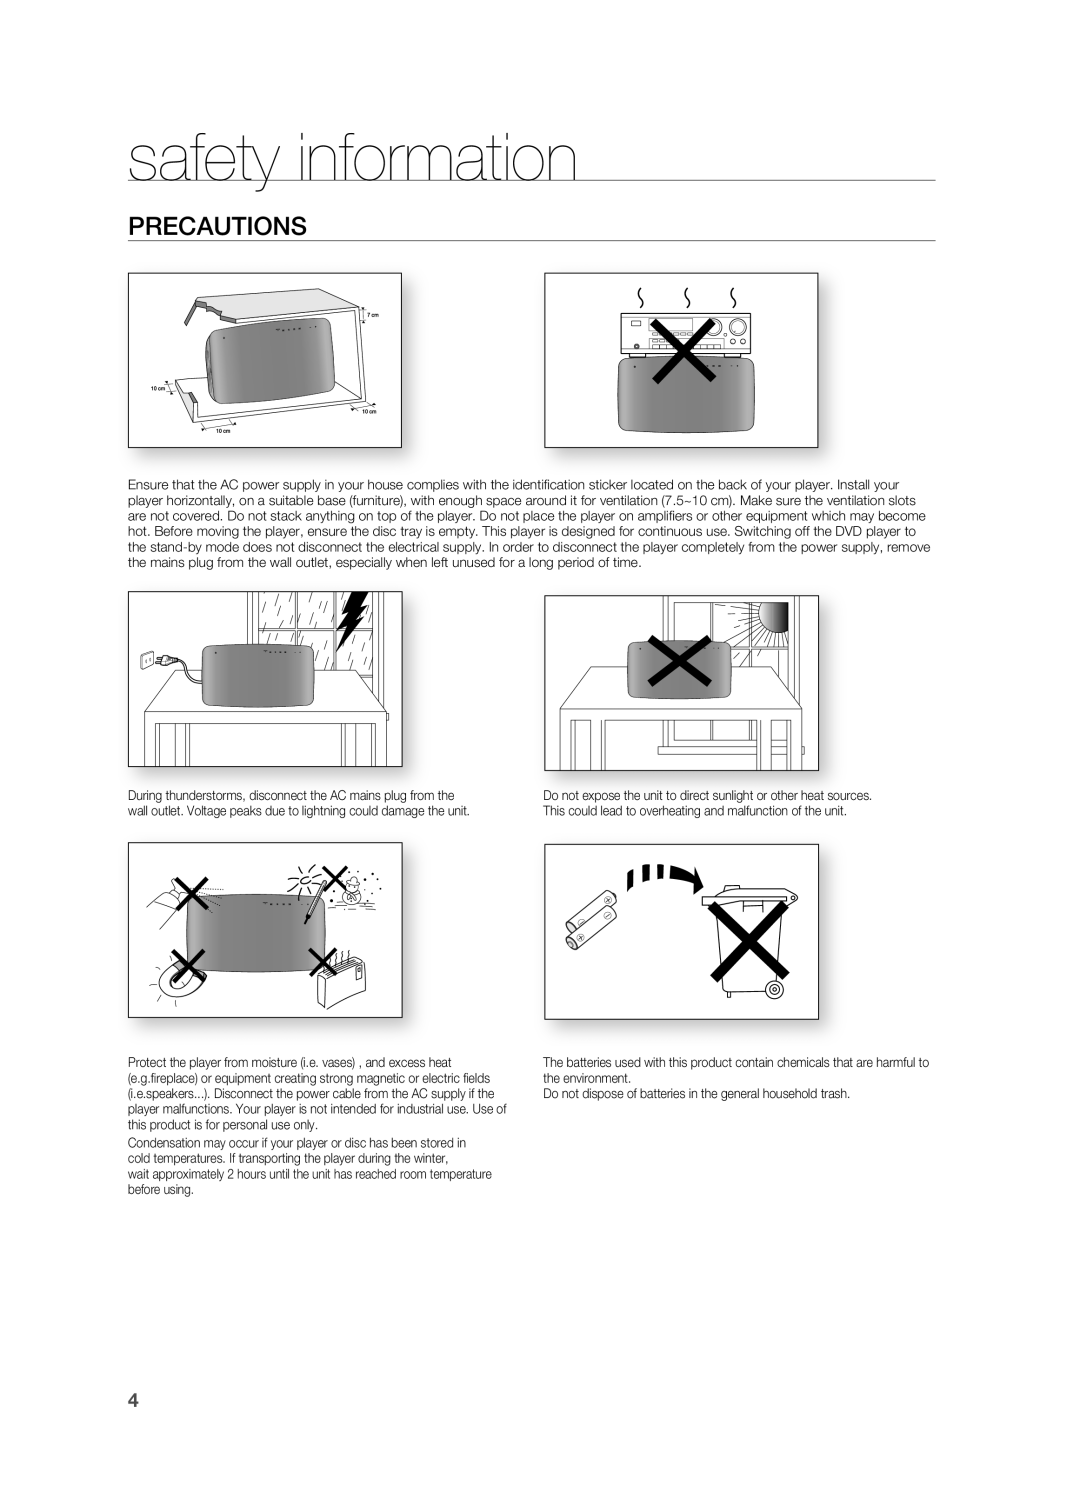 Samsung HT-TX715 user manual PrECAUTIONS, safety information 